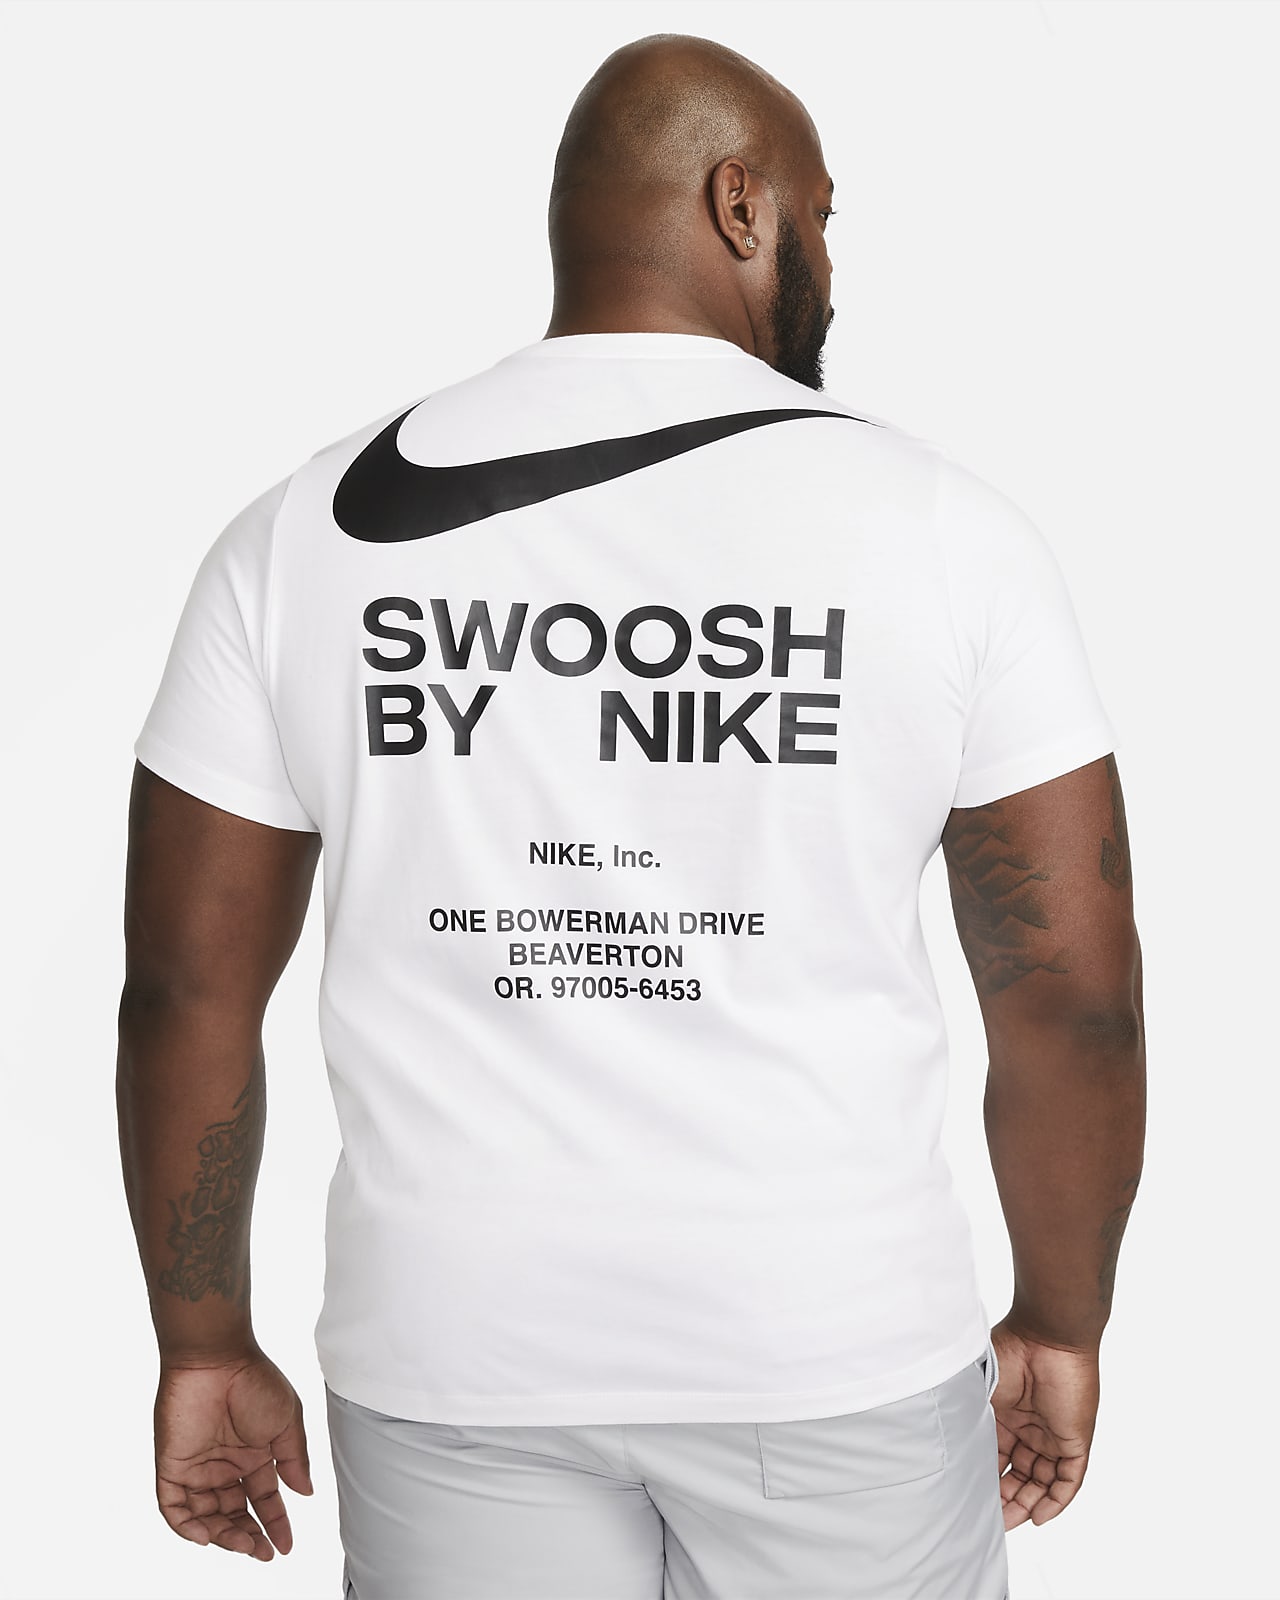 Nike Sportswear T-Shirt. Nike